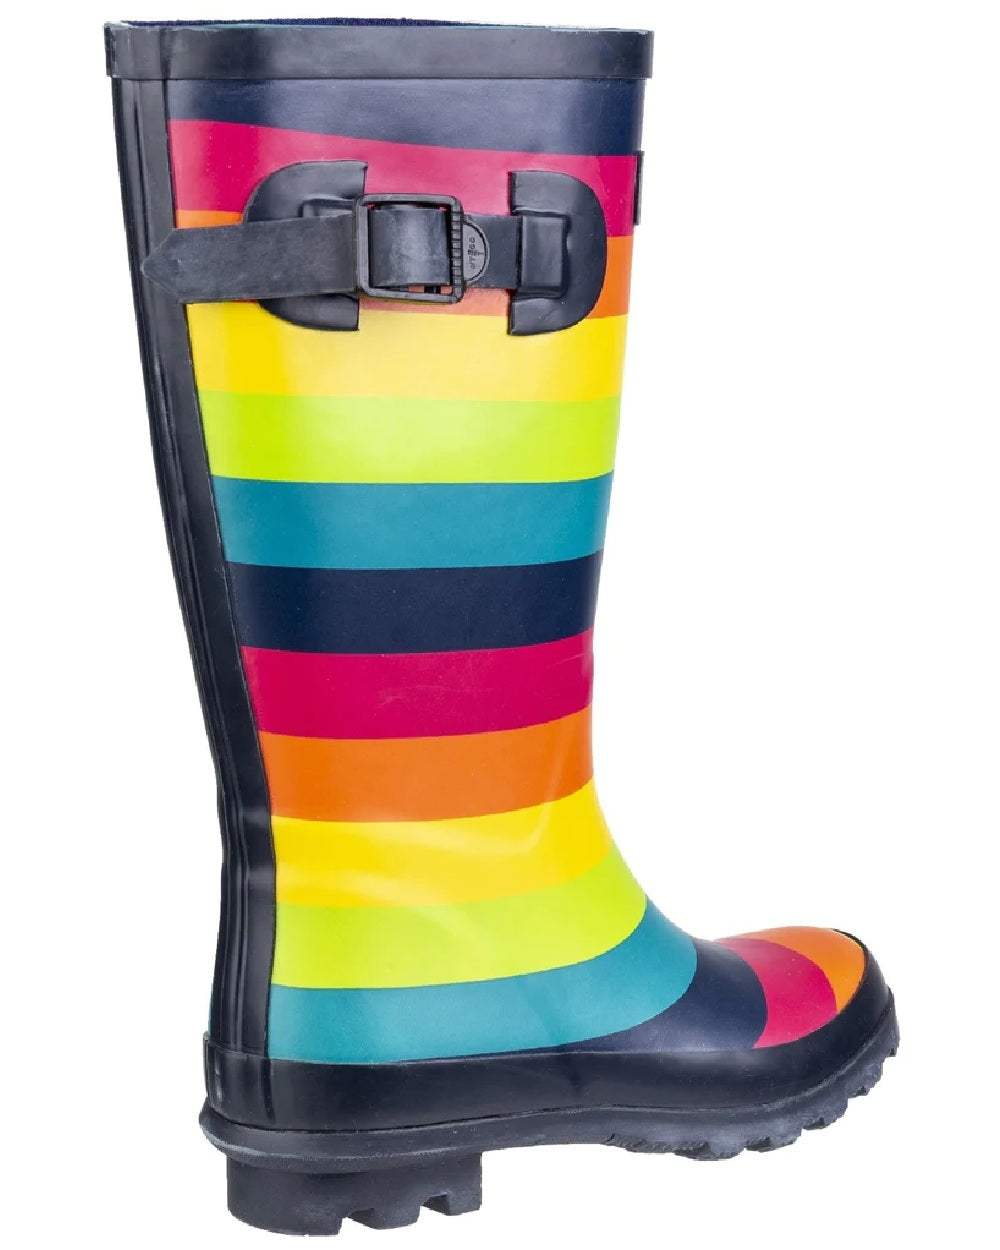 Cotswold Kids Rainbow Wellington Boots